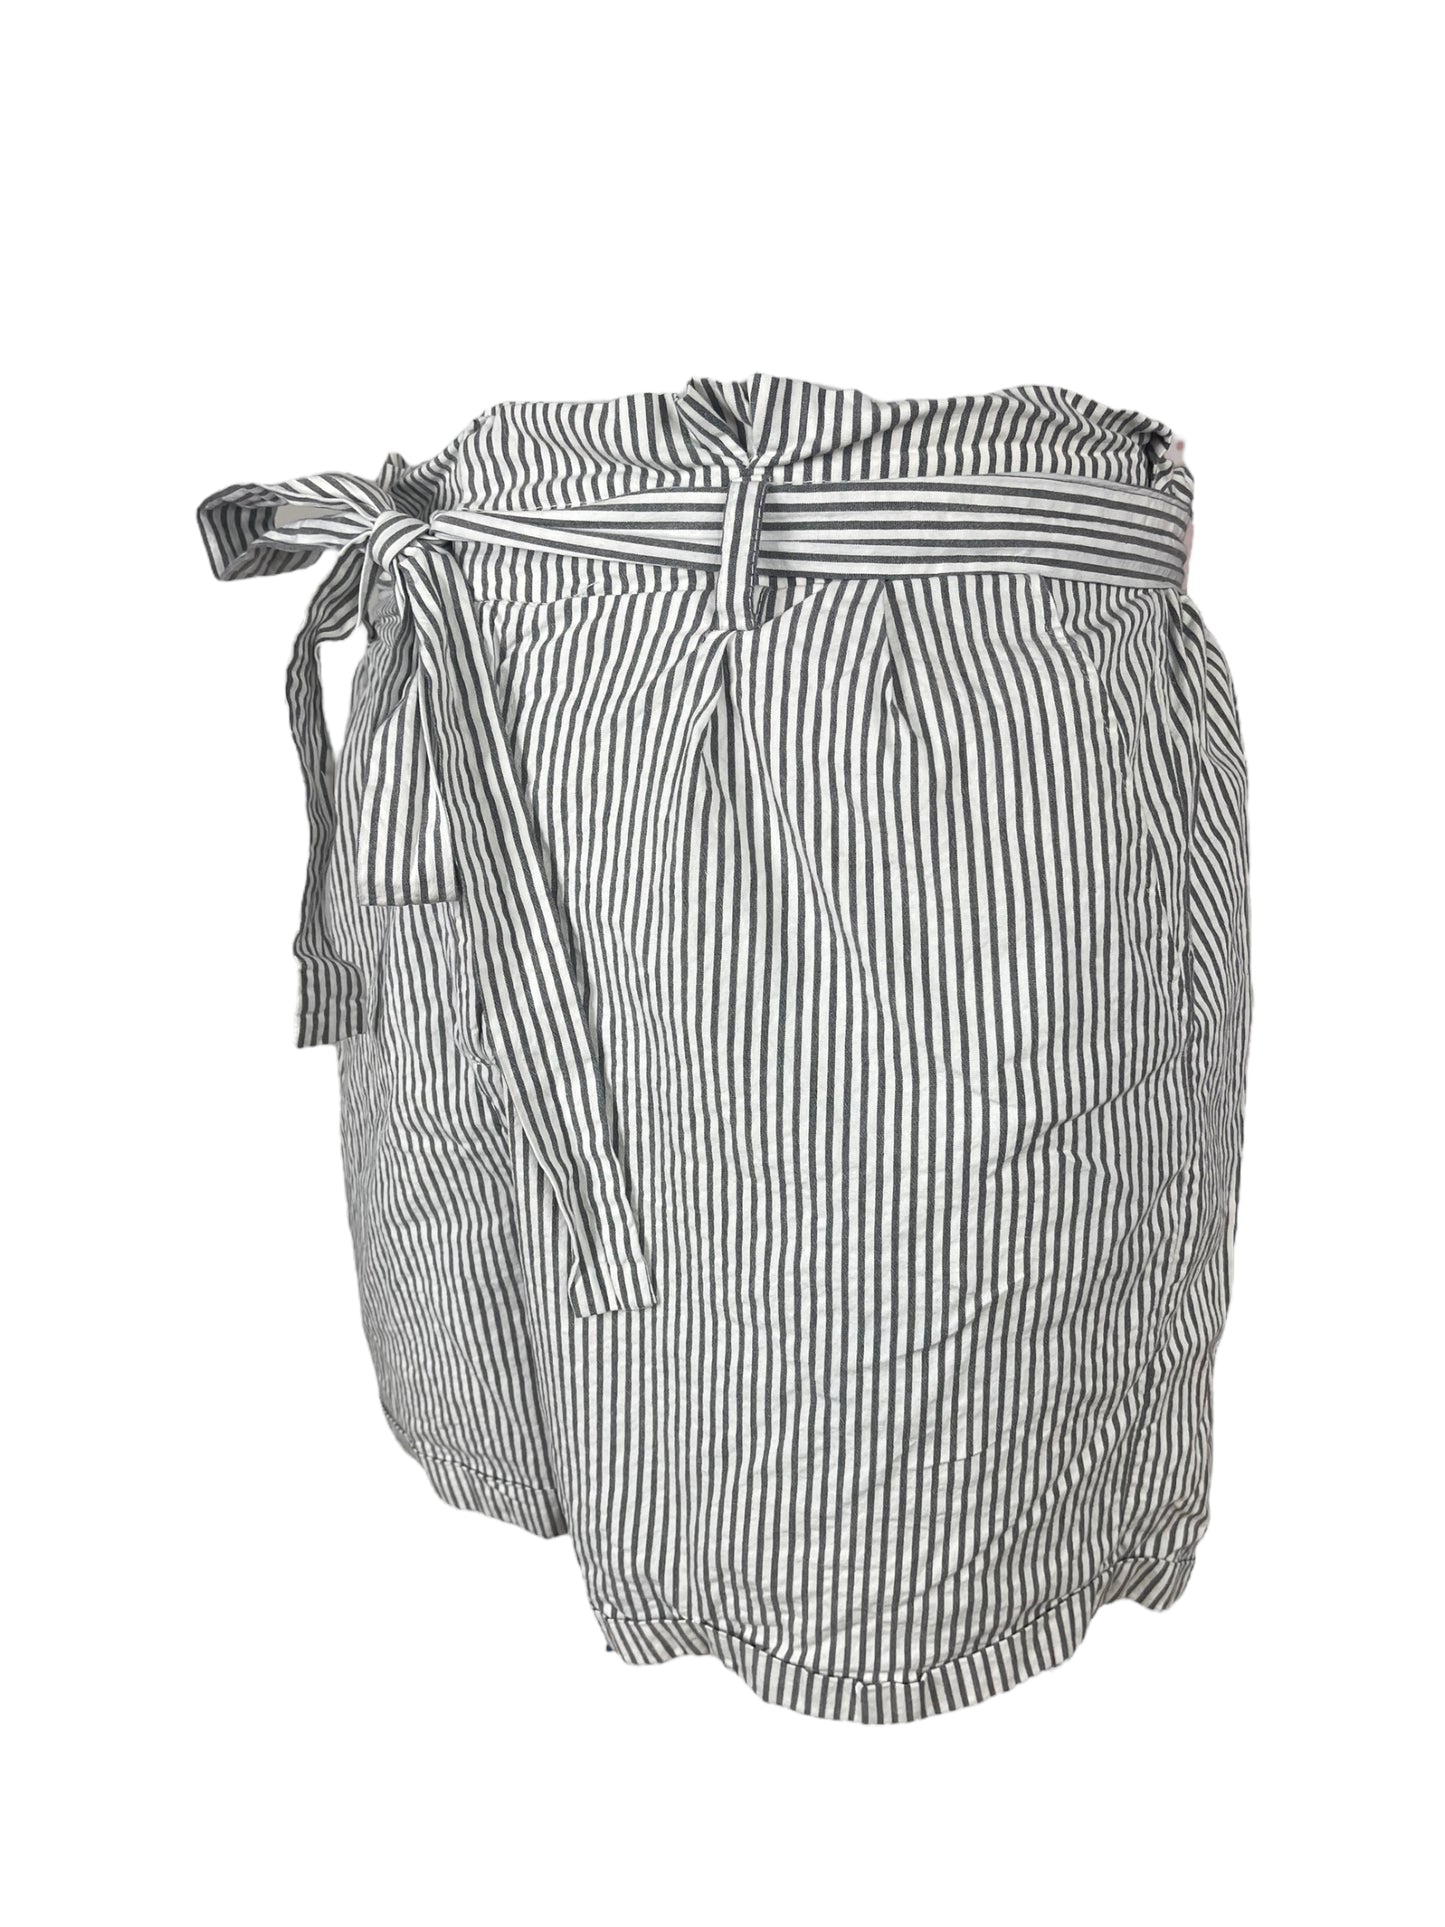 “Forever 21” White & Grey Paperbag Waist Dress Shorts (3X)